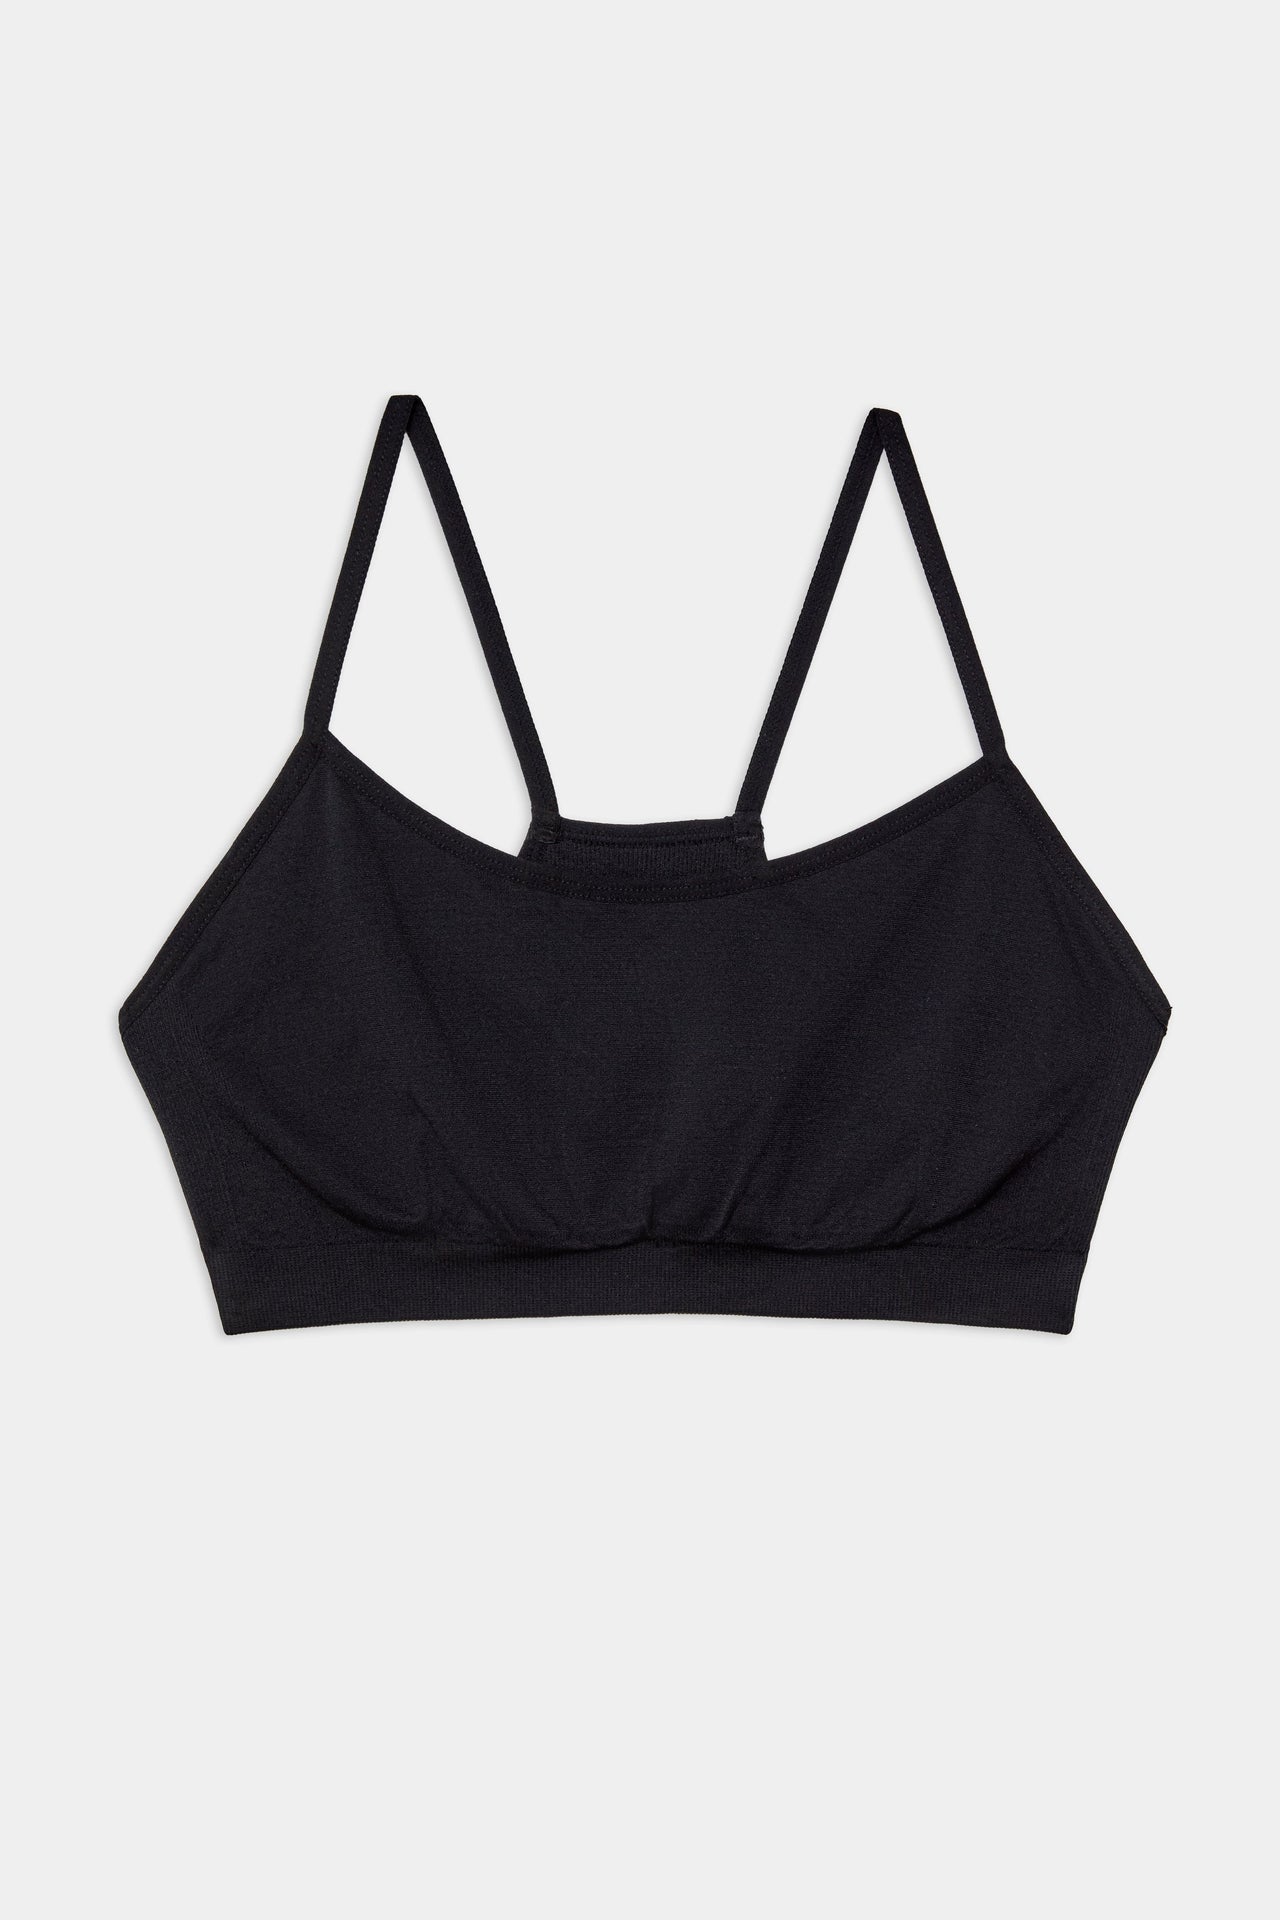 A SPLITS59 Loren Bra Bundle sports bra in black on a white background.